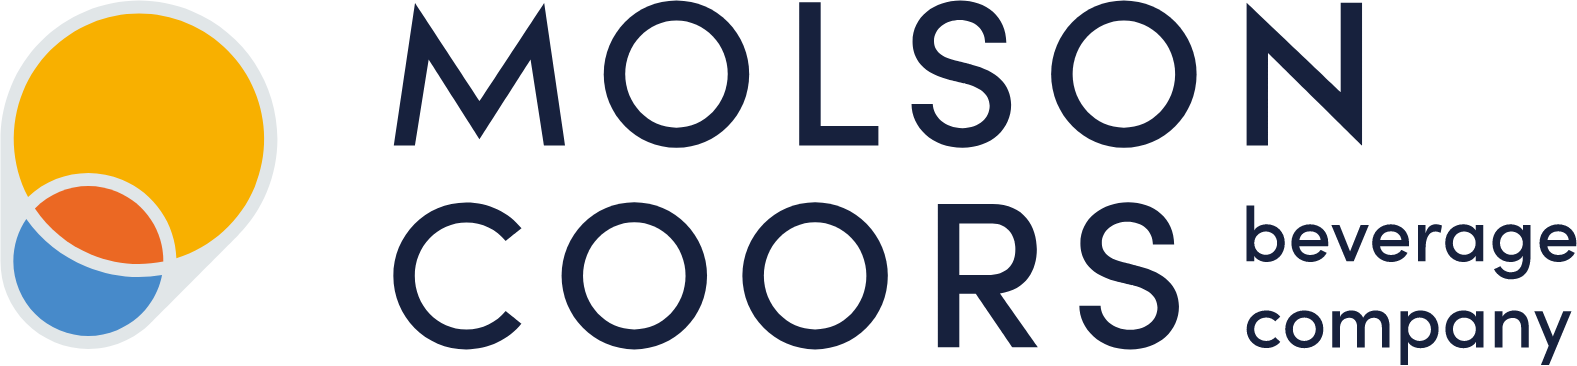 Molson Coors logo large (transparent PNG)